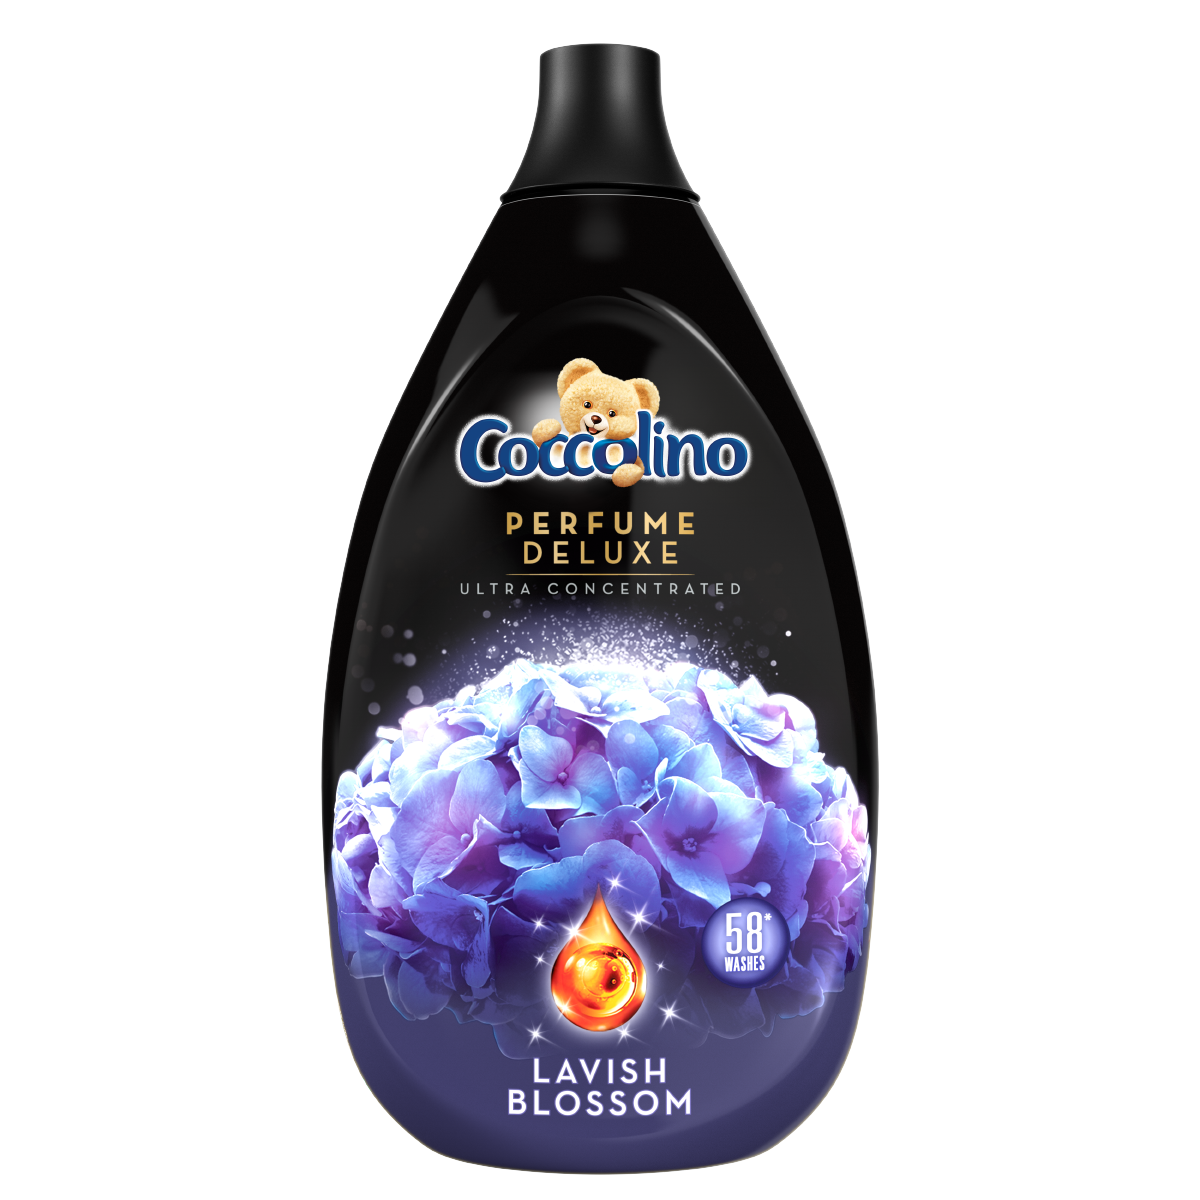 Coccolino Perfume Deluxe 870ml - Lavish Blossom koncentrát od ninex.cz